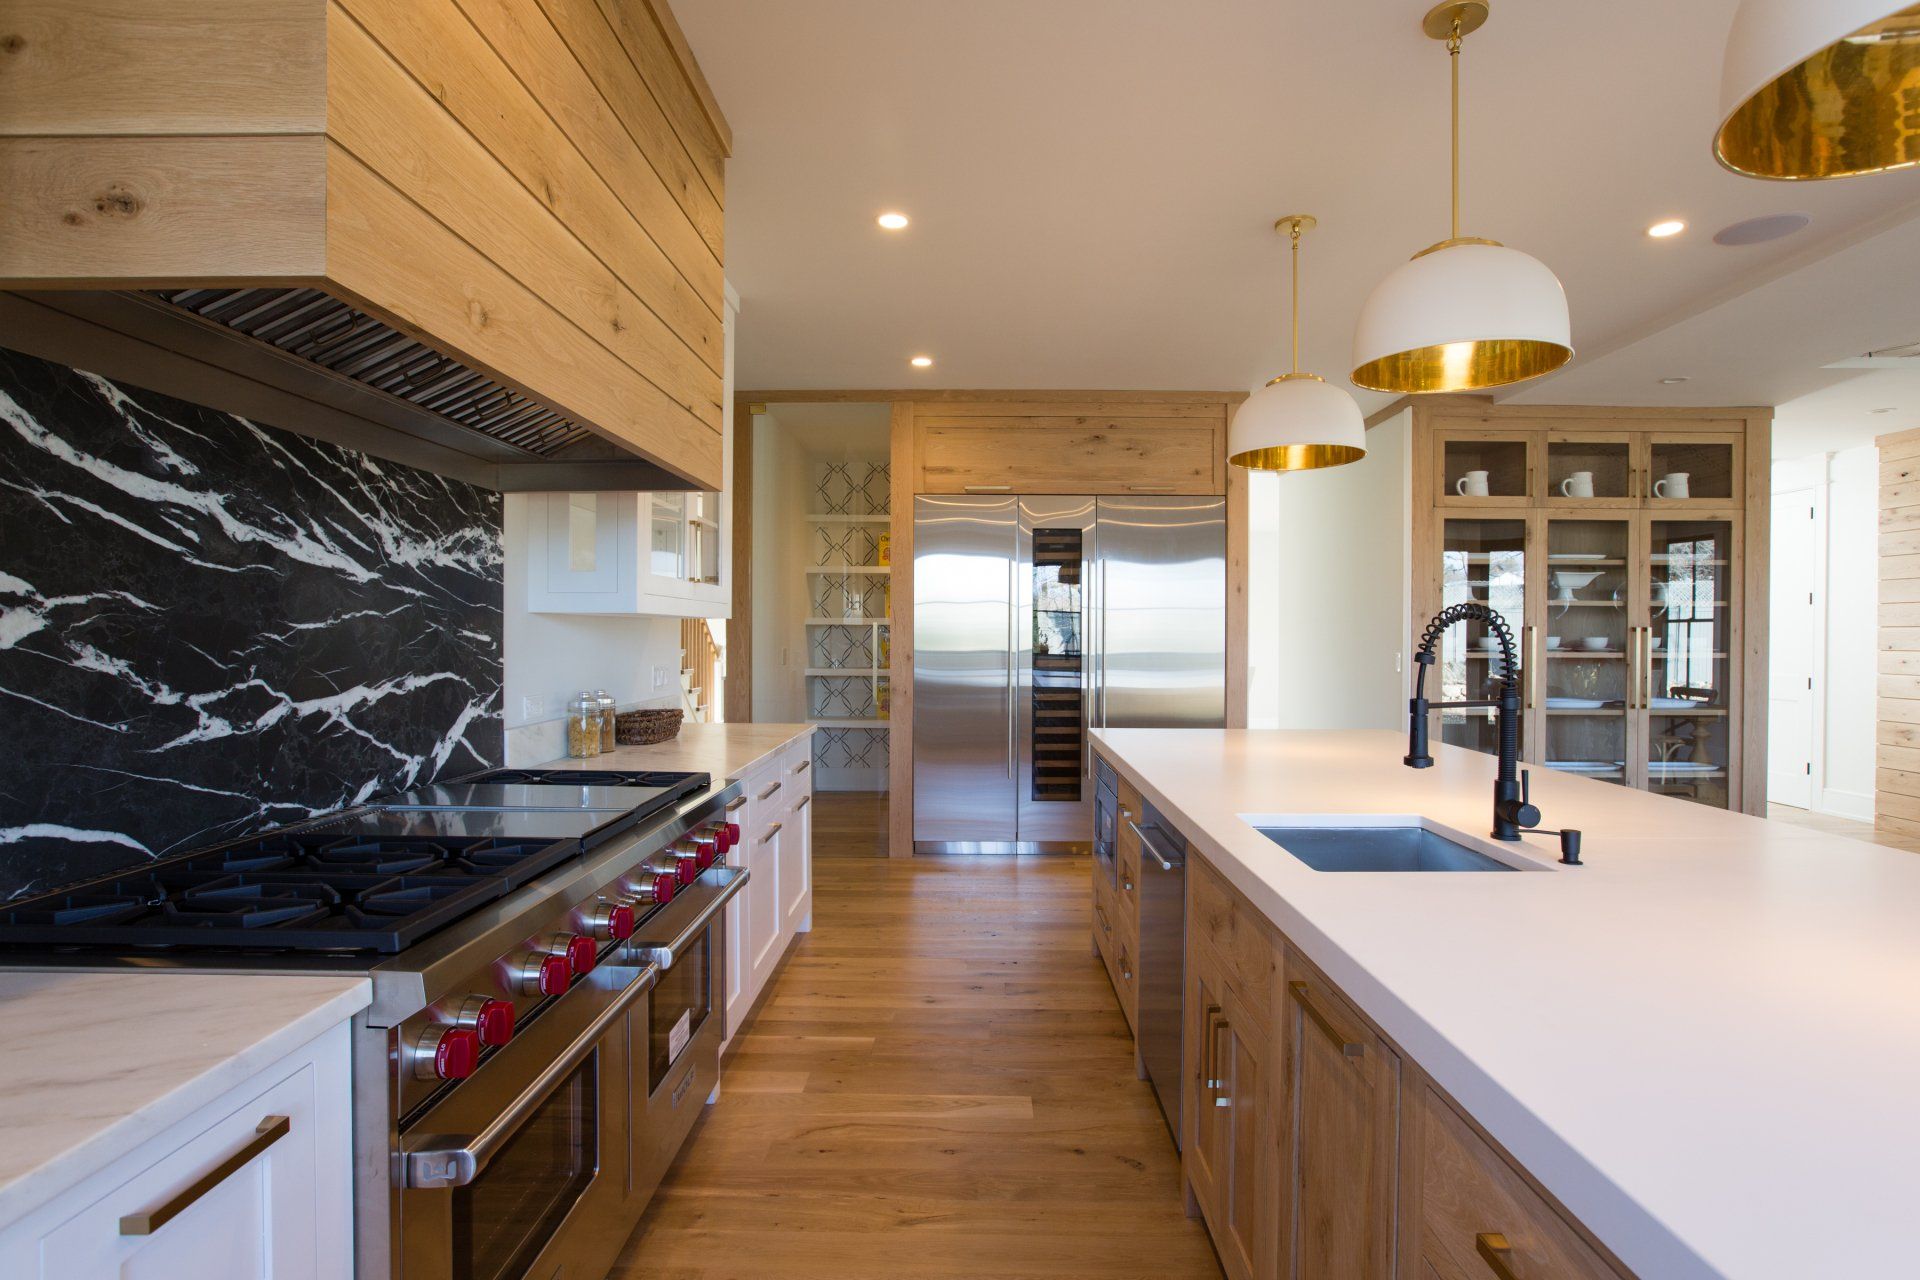 Wooden Cabinets & Gas Range | Custom Kitchen Cabinets | Domestic Kitchen Inc.